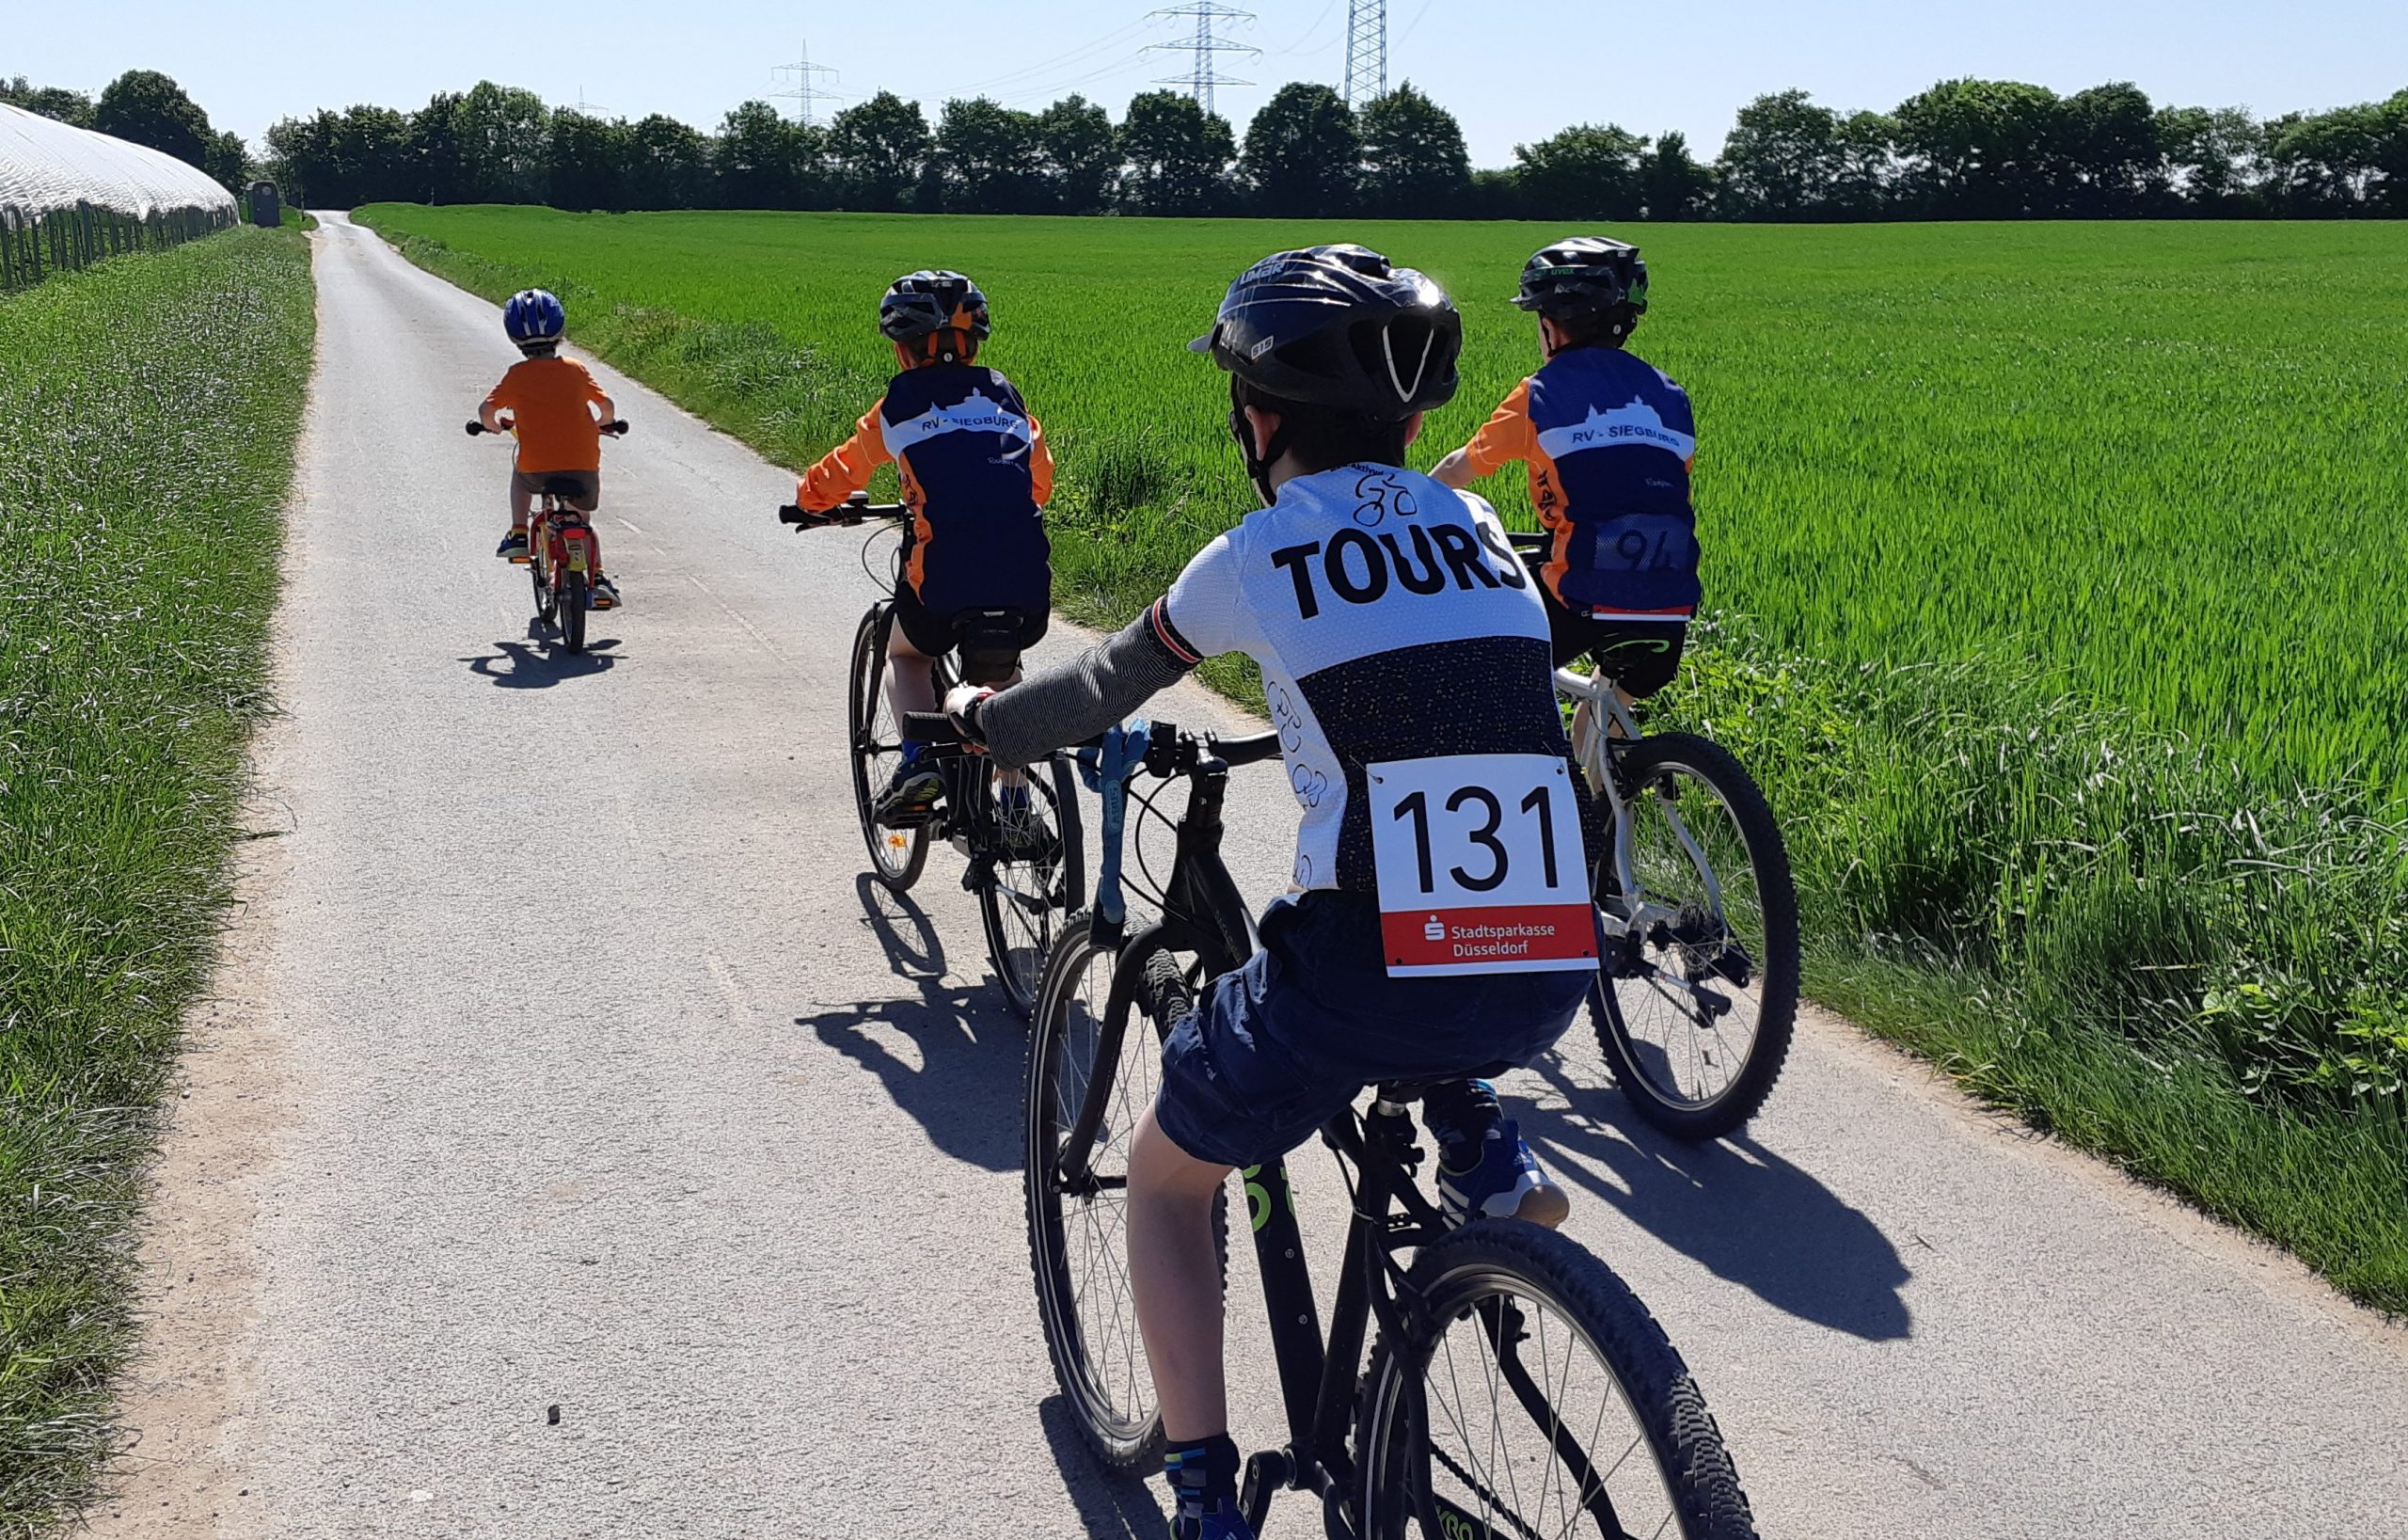 Kids & Family Touren starten Anfang Mai in die Radsportsaison